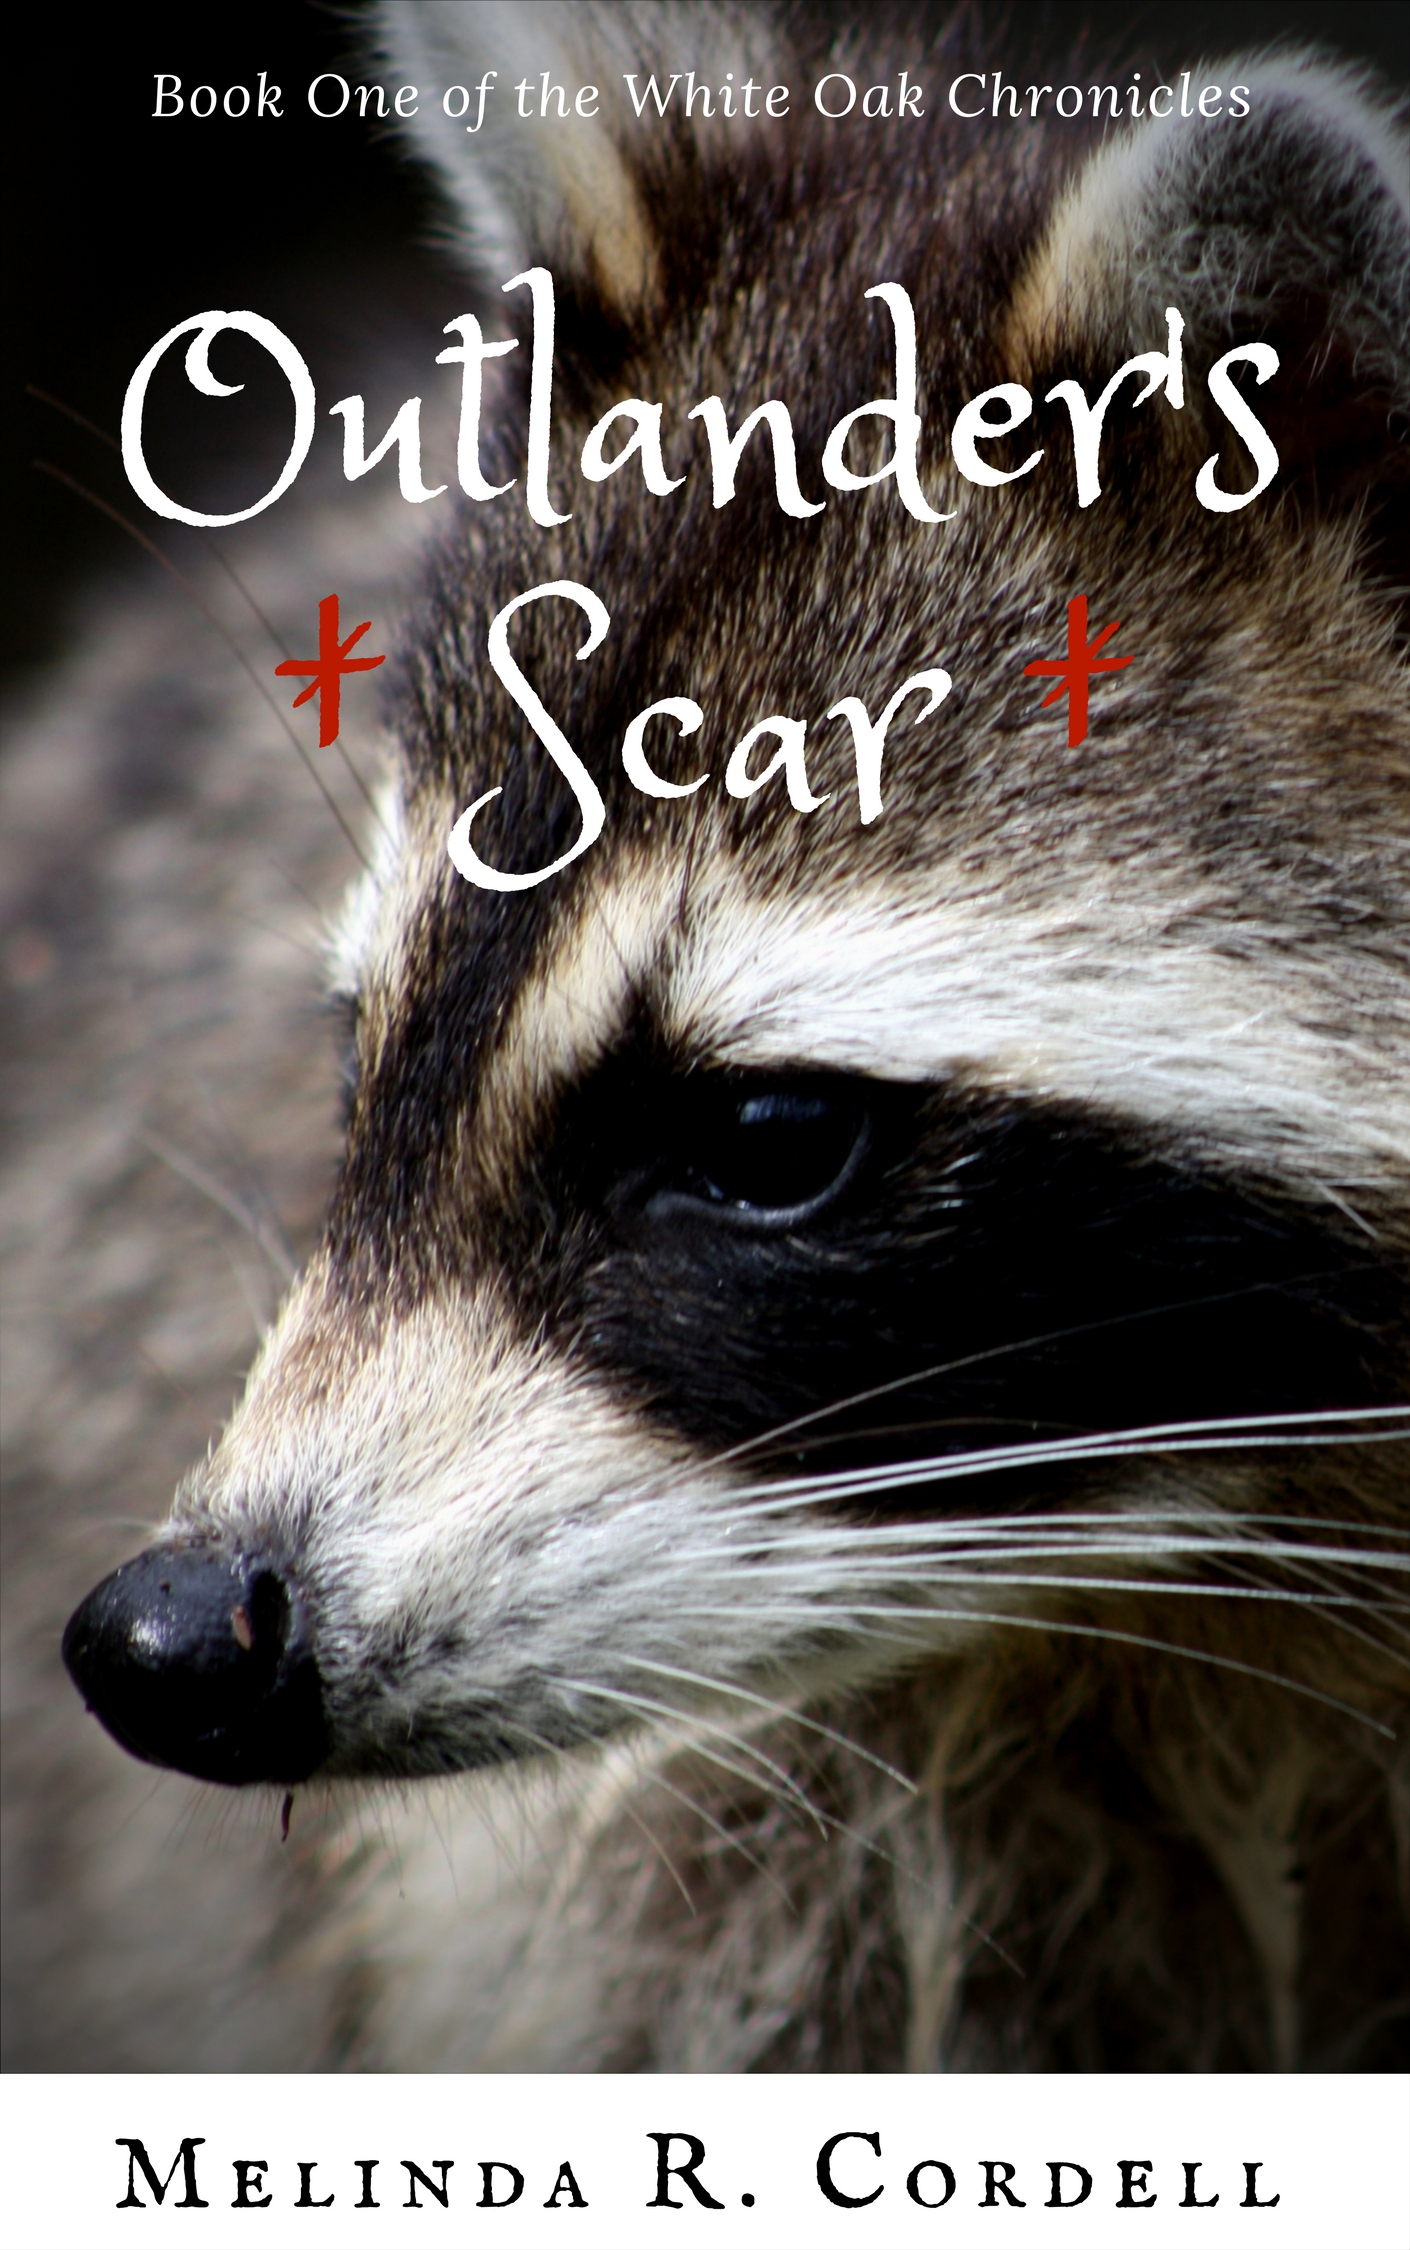 Outlanders Scar